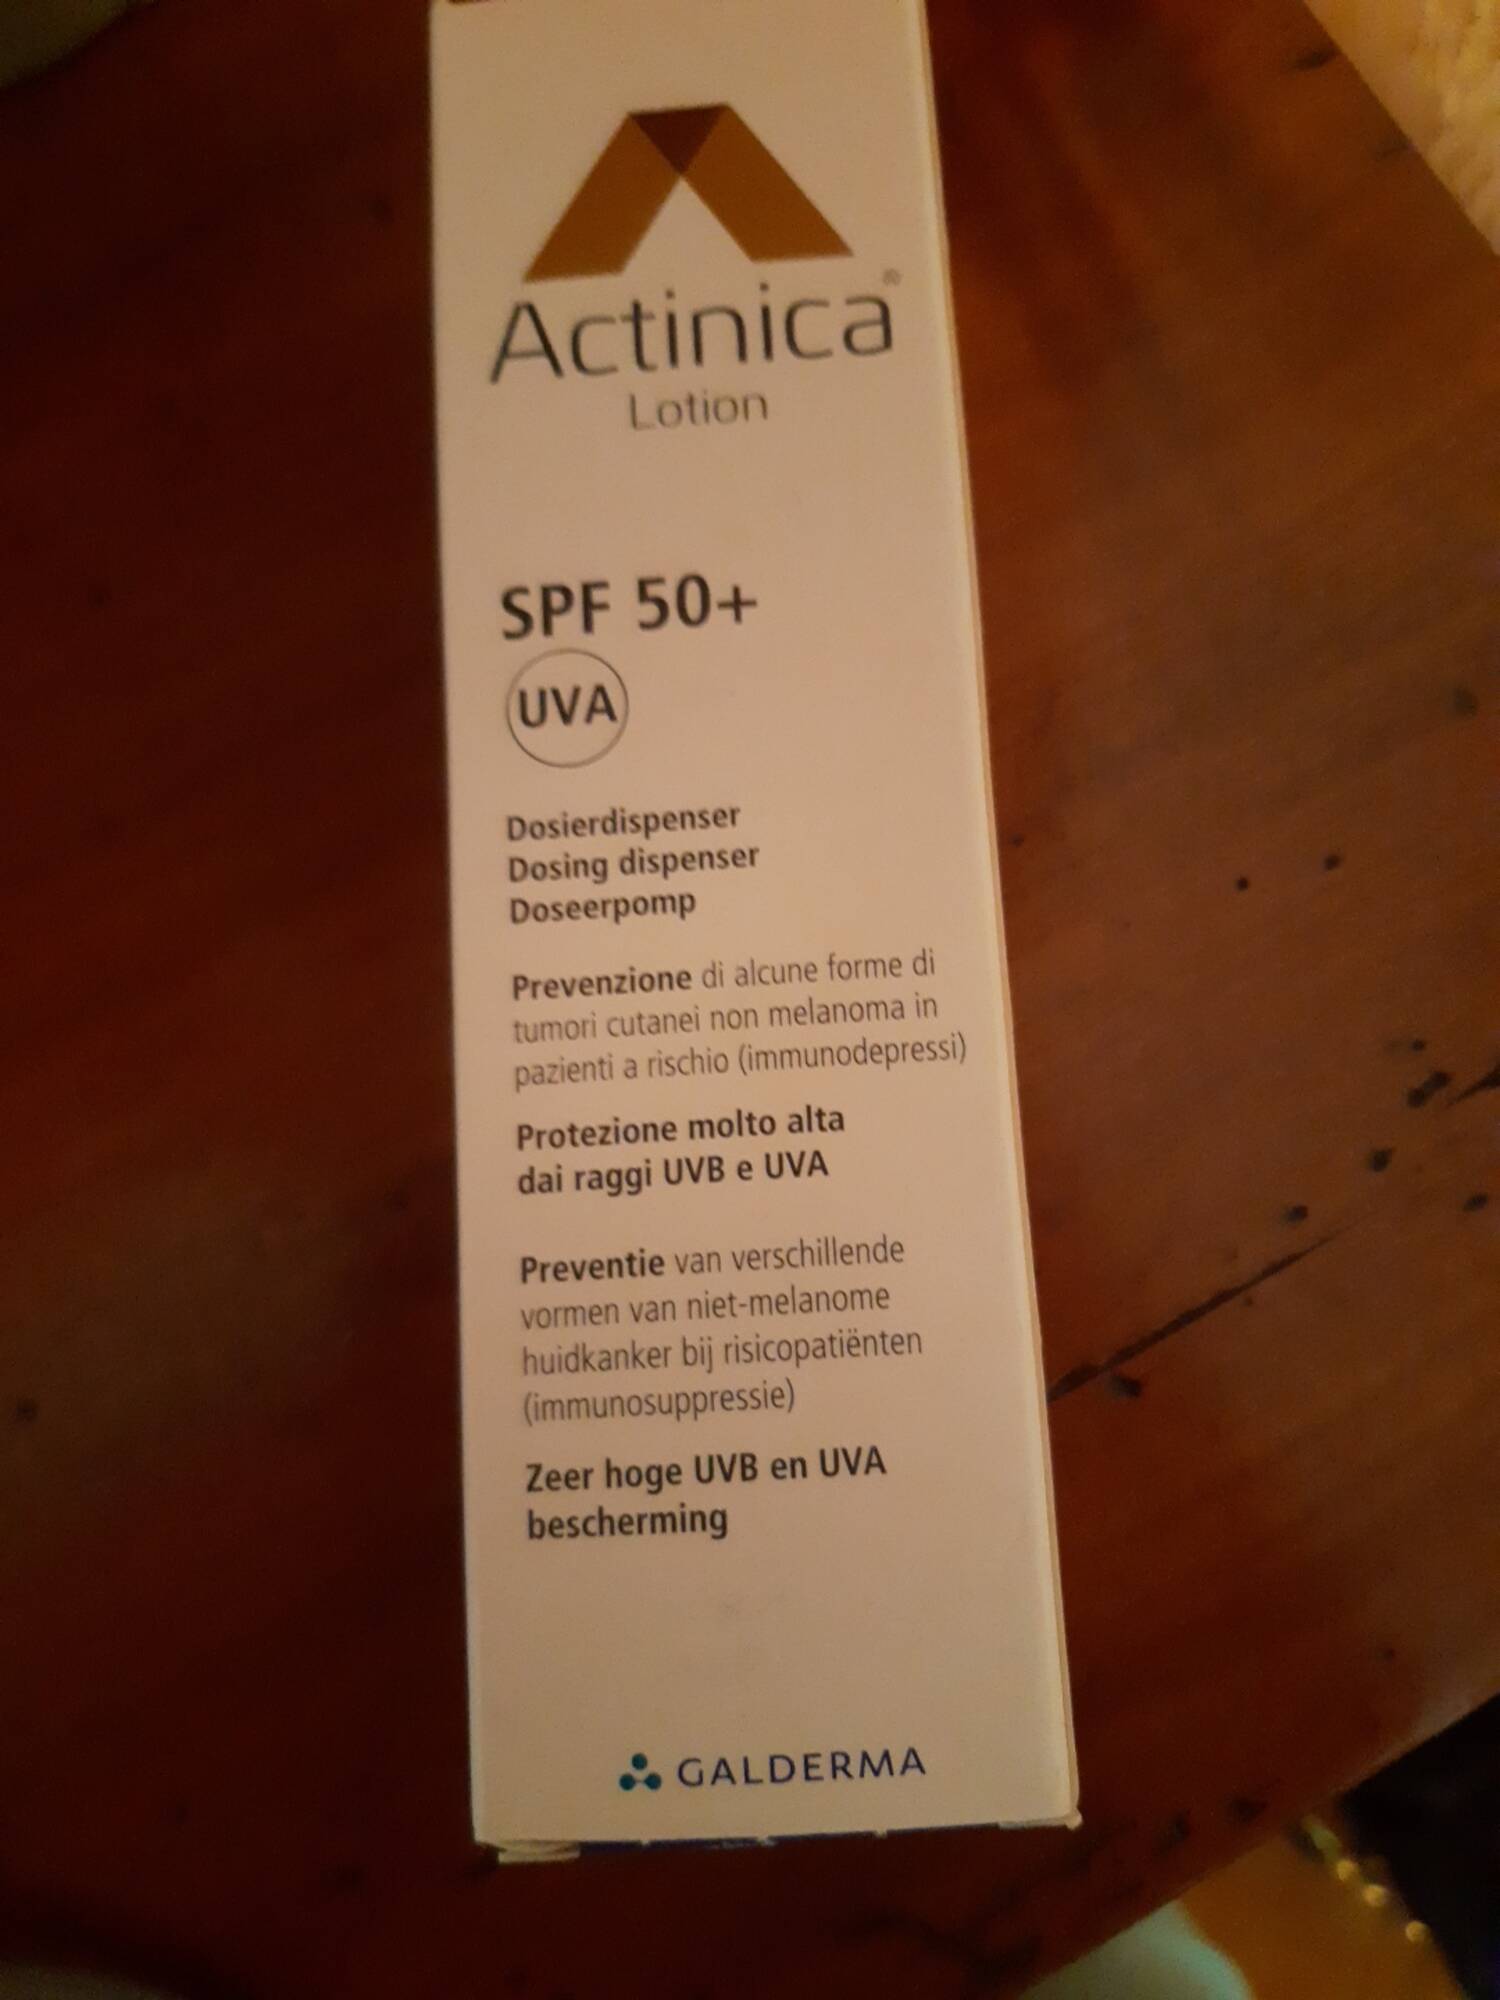 GALDERMA - Actinica lotion SPF 50+